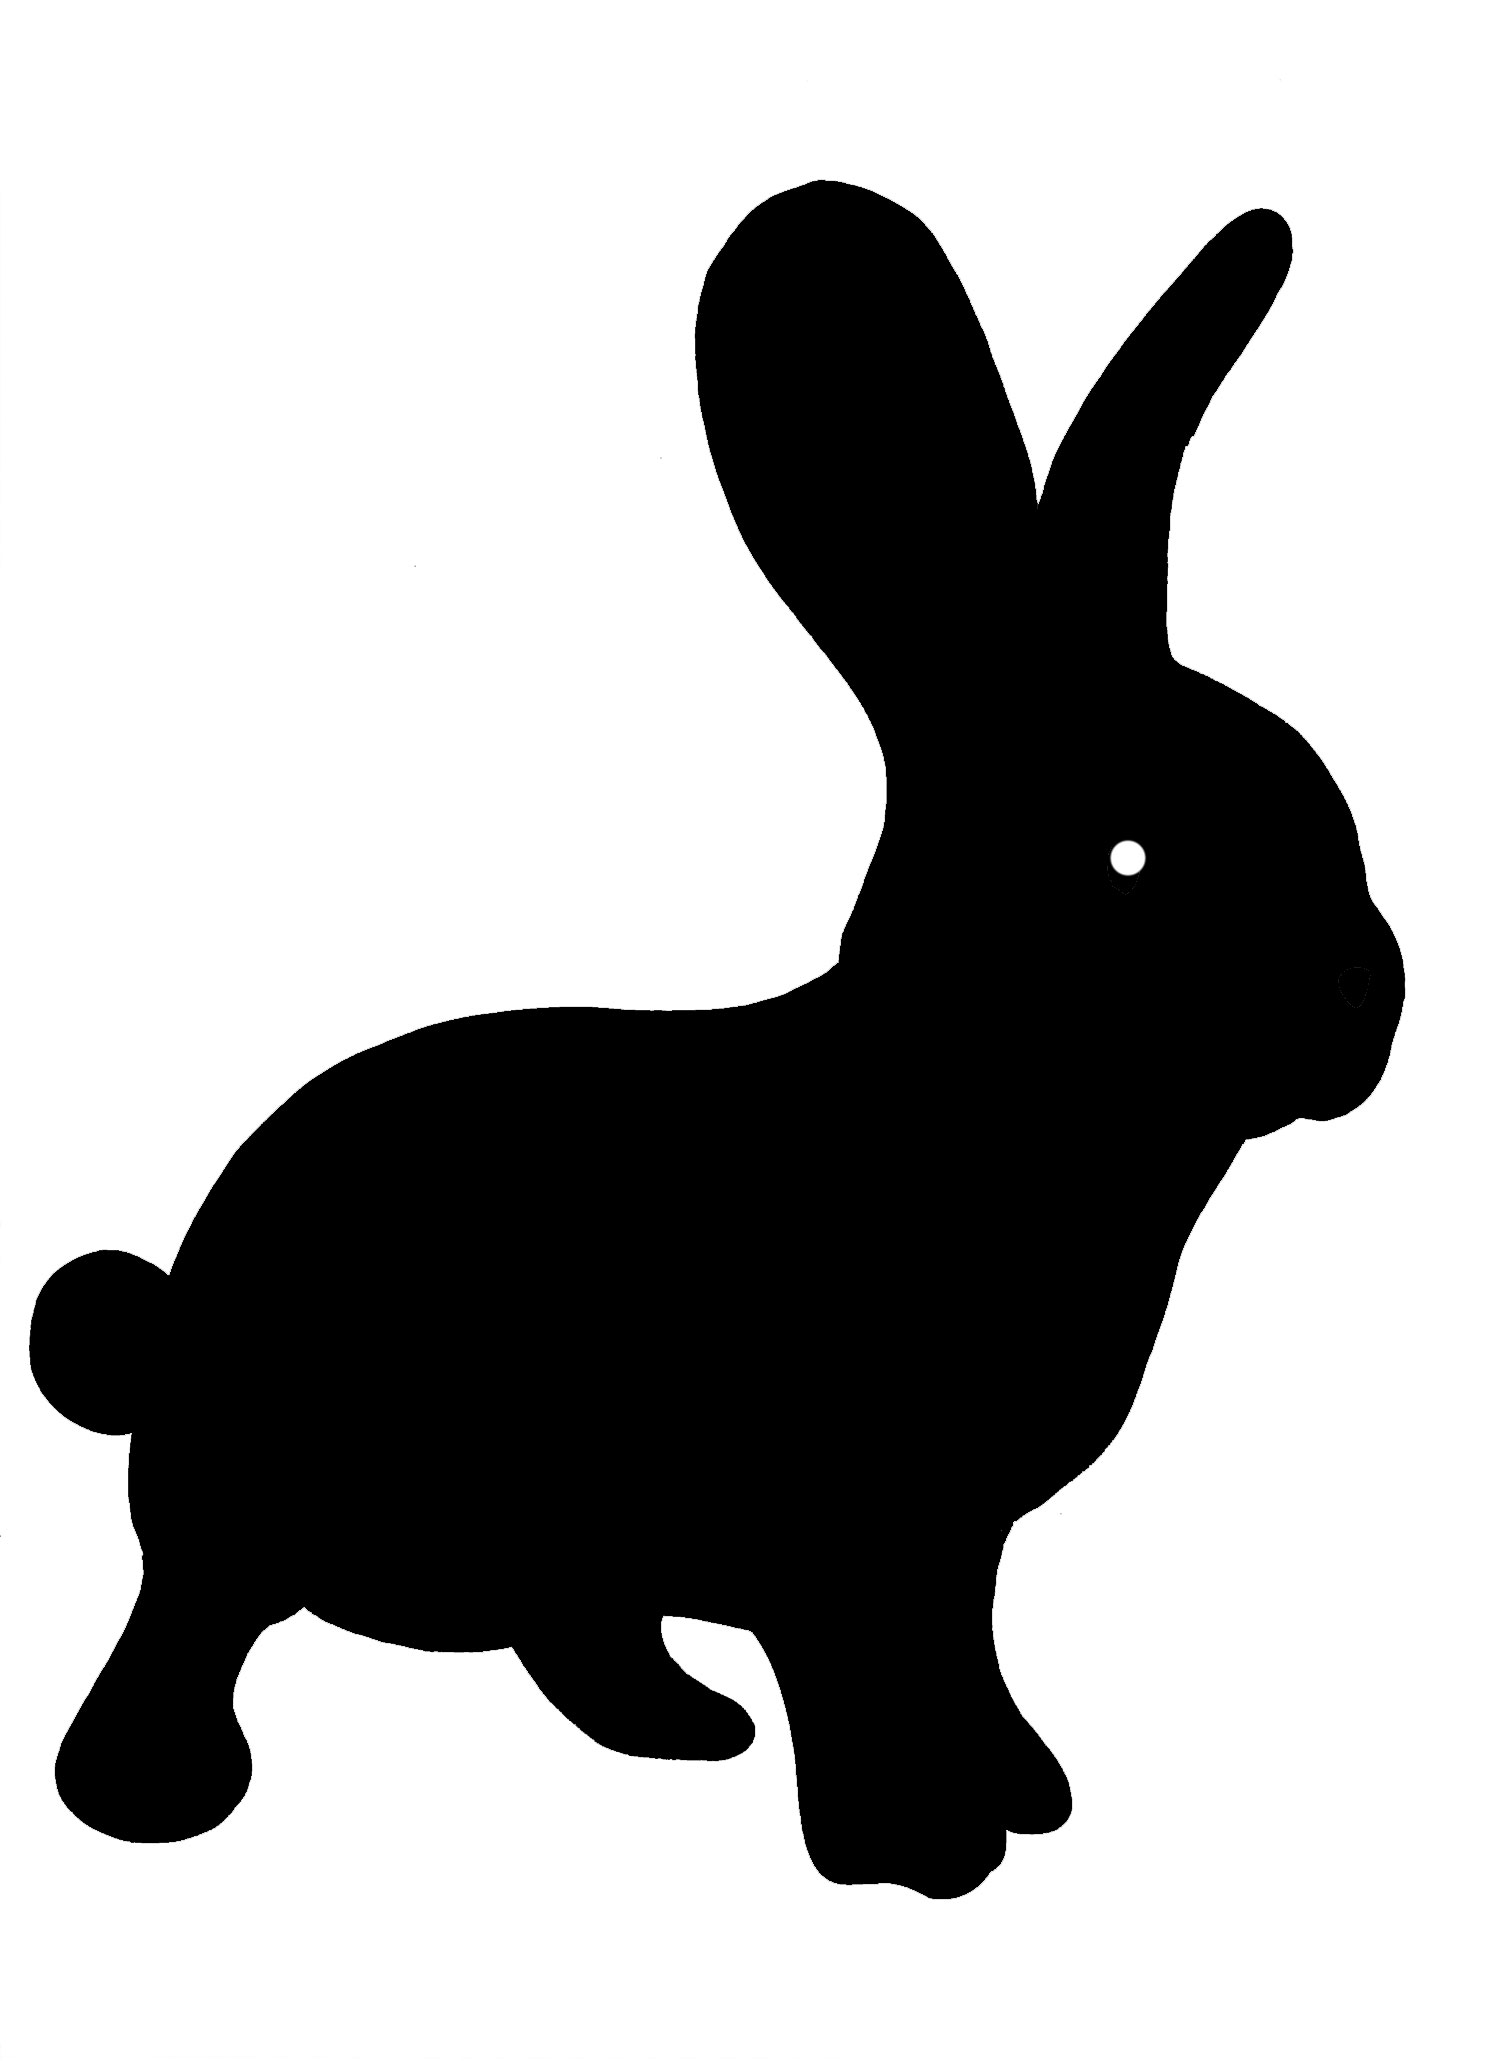 White Rabbit Silhouette   Clipart Best